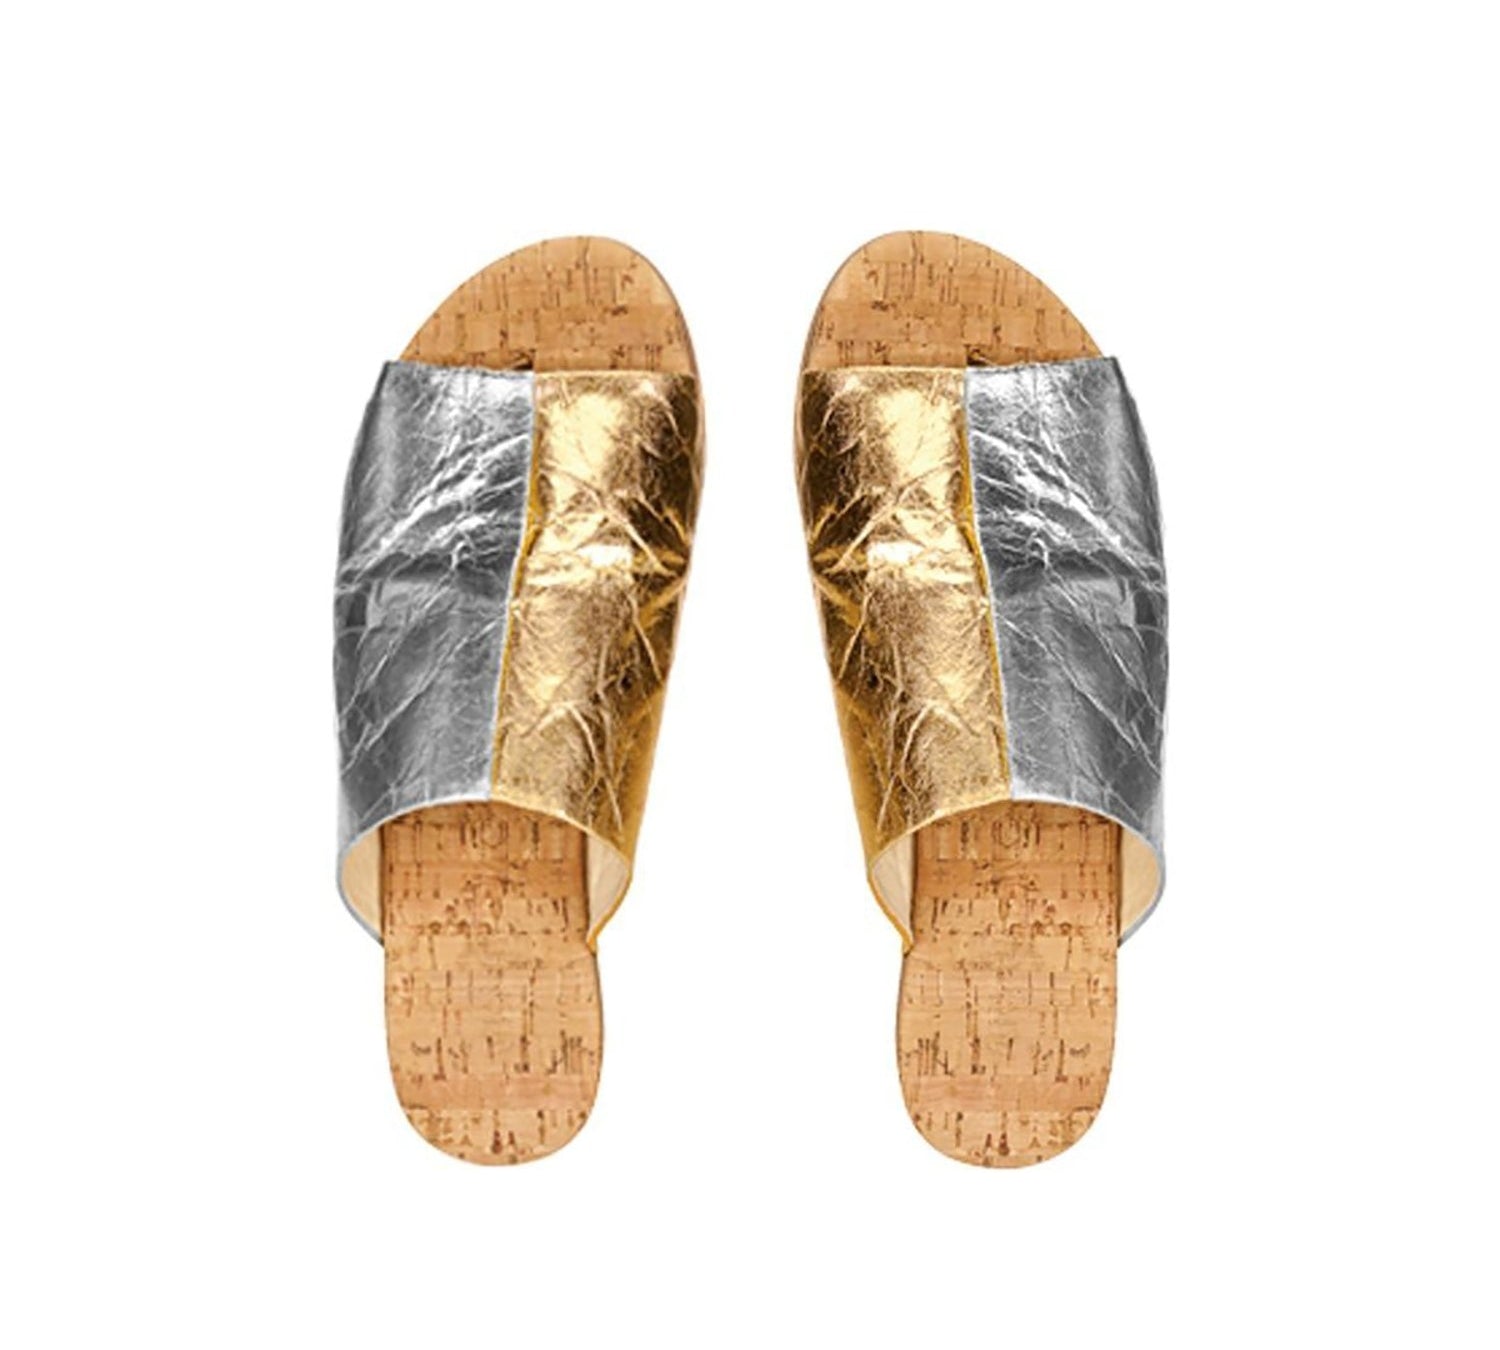 Madeira Sandals - SALE - shoe - artesano